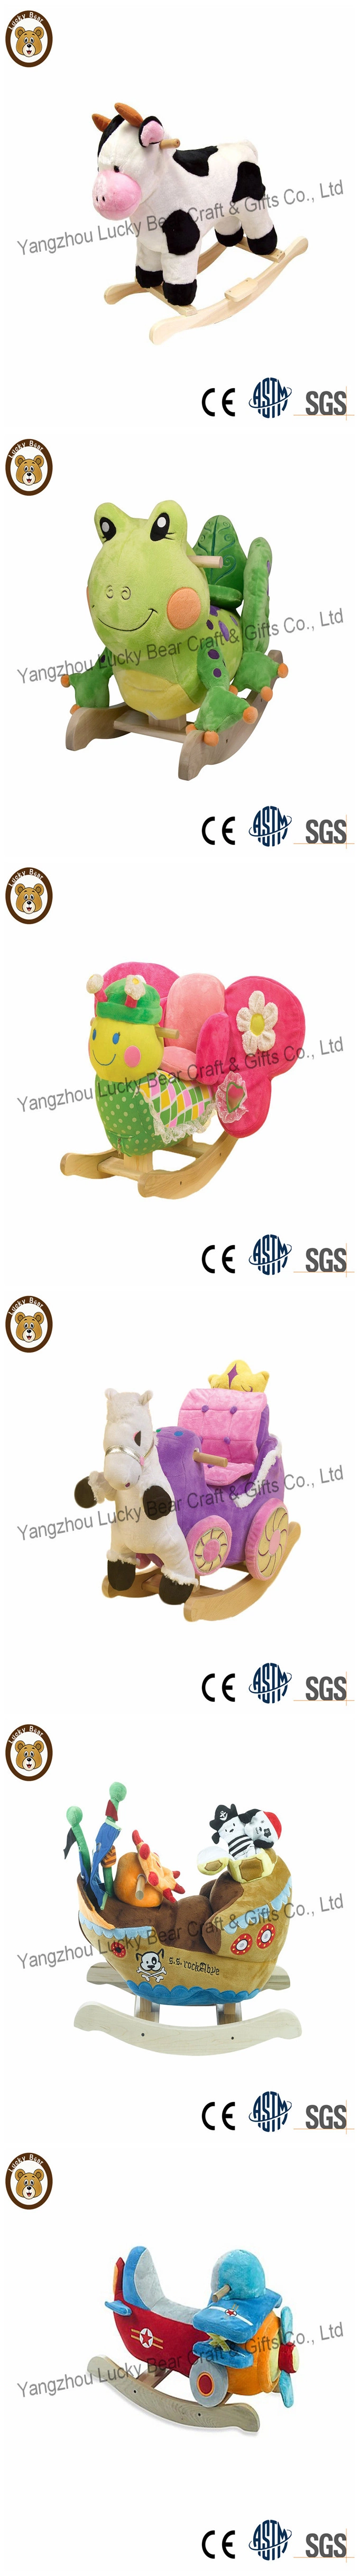 Hotsale Plush Baby Rocking Animal Children Toy Stuffed Ladybug Rocker